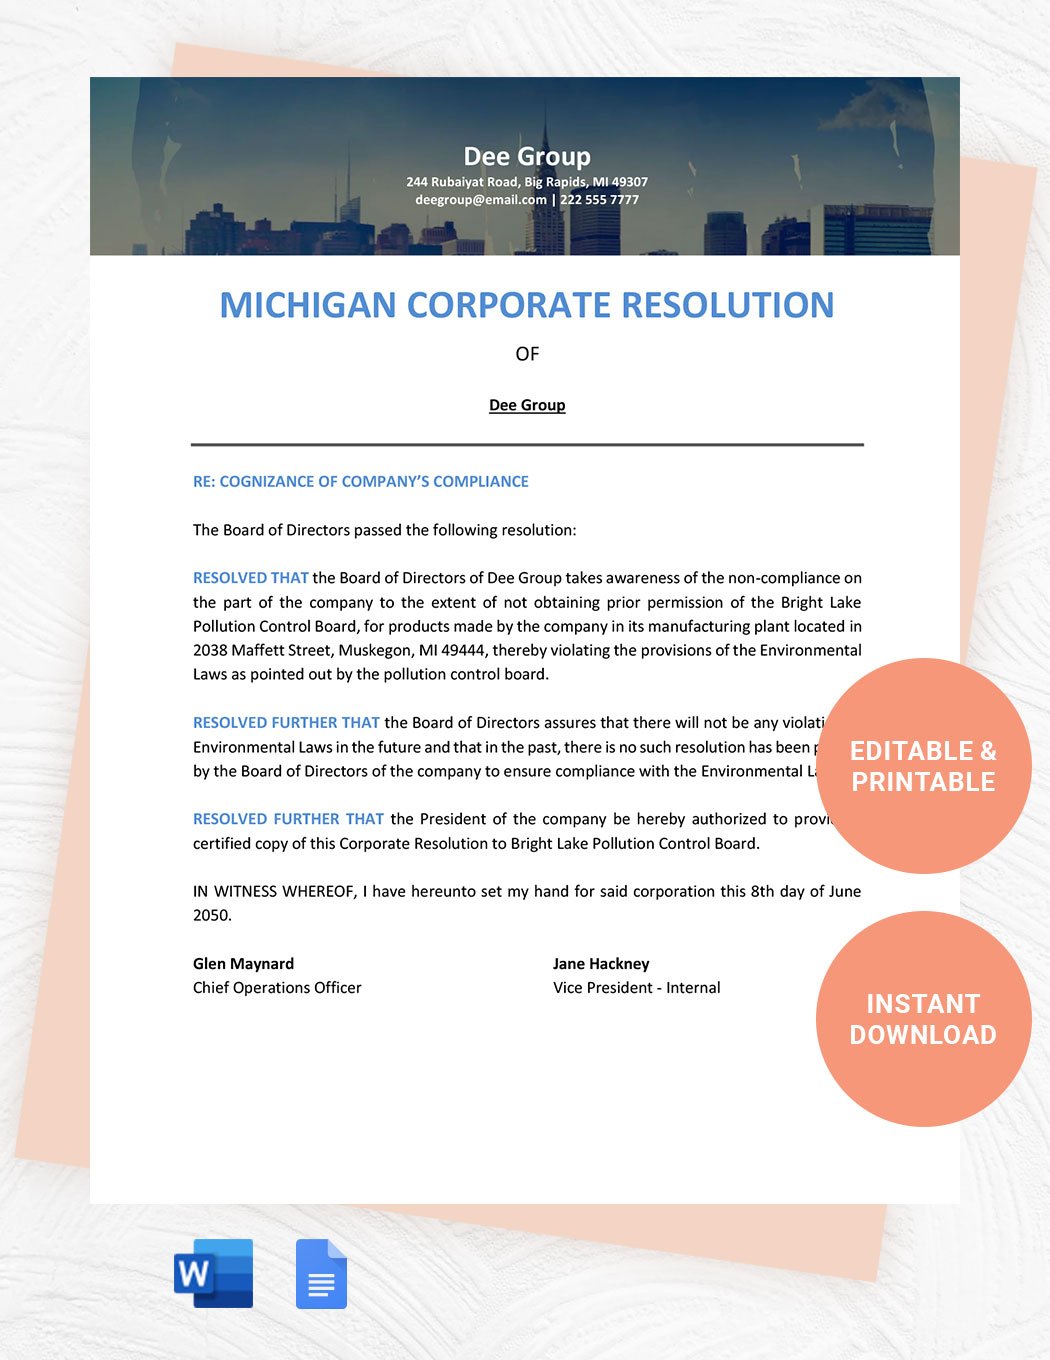 Michigan Corporate Resolution Template in Word, Google Docs